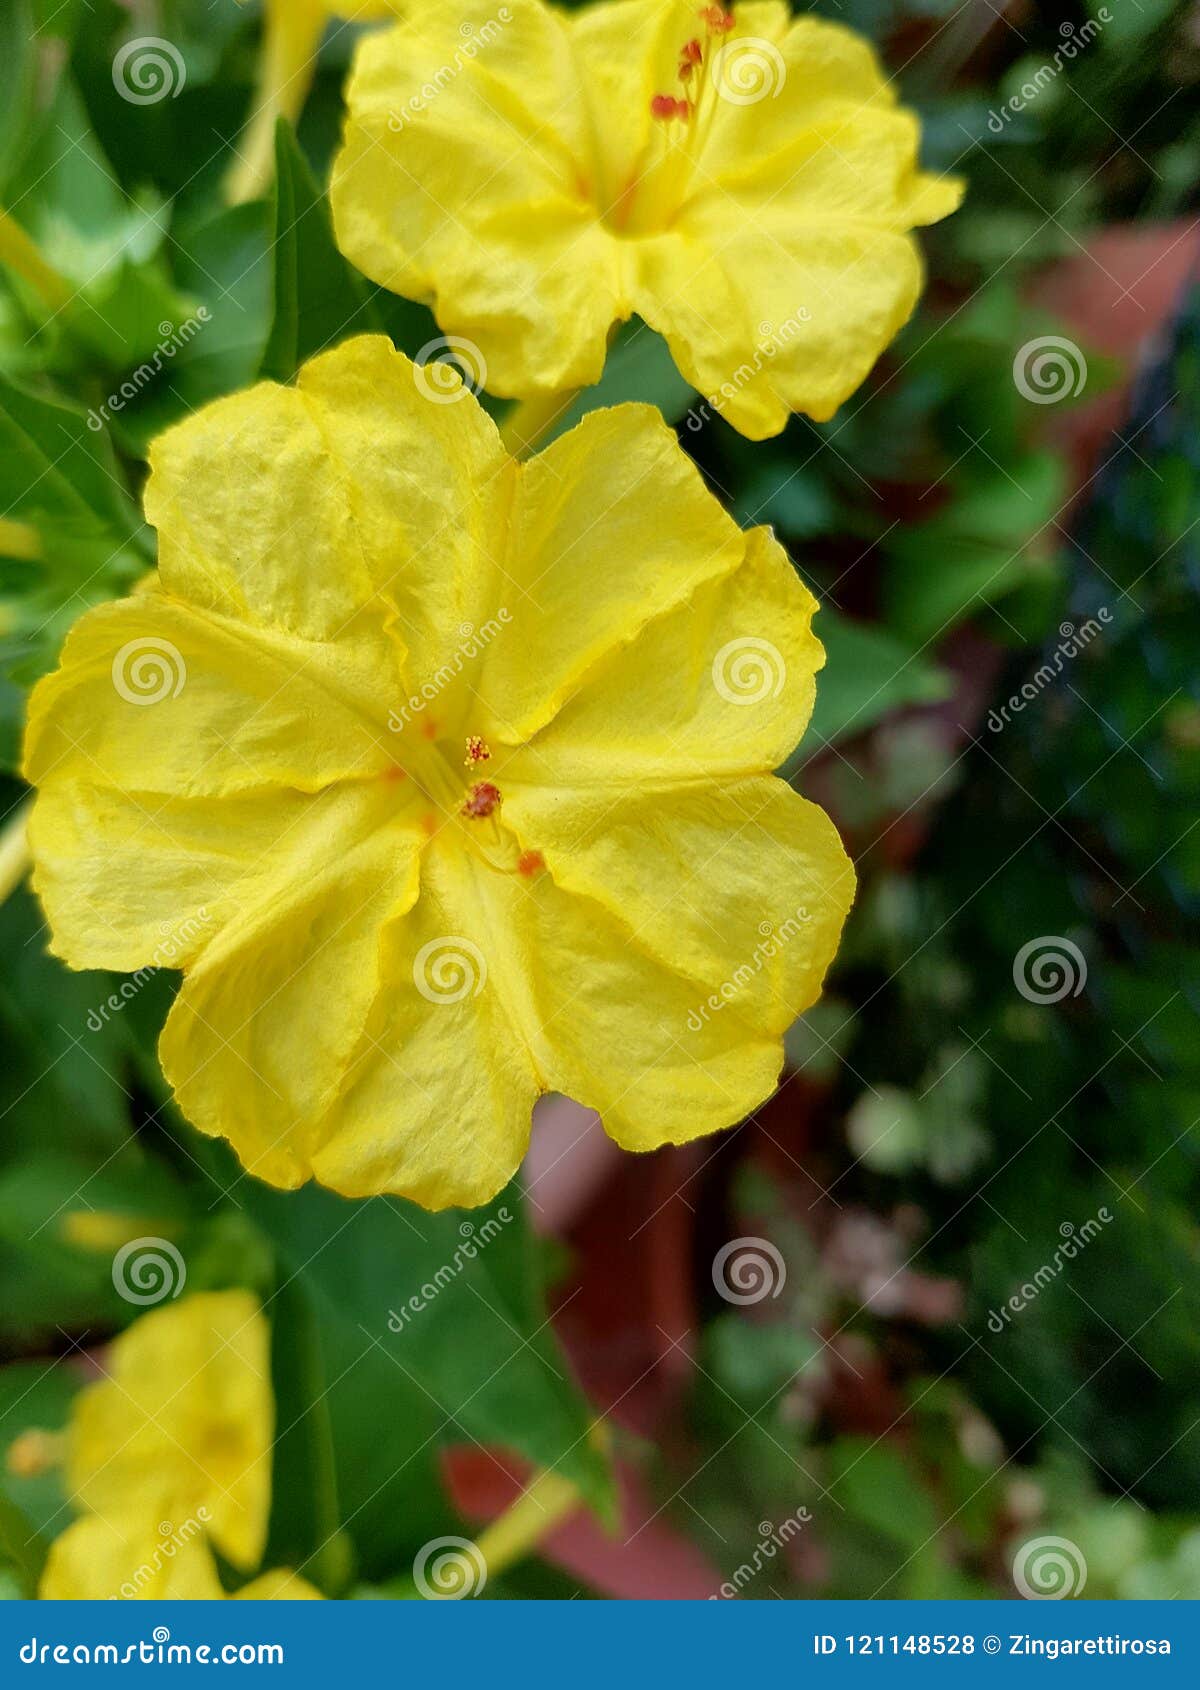 mirabilis jalapa, or bella di notte, yellow flowers